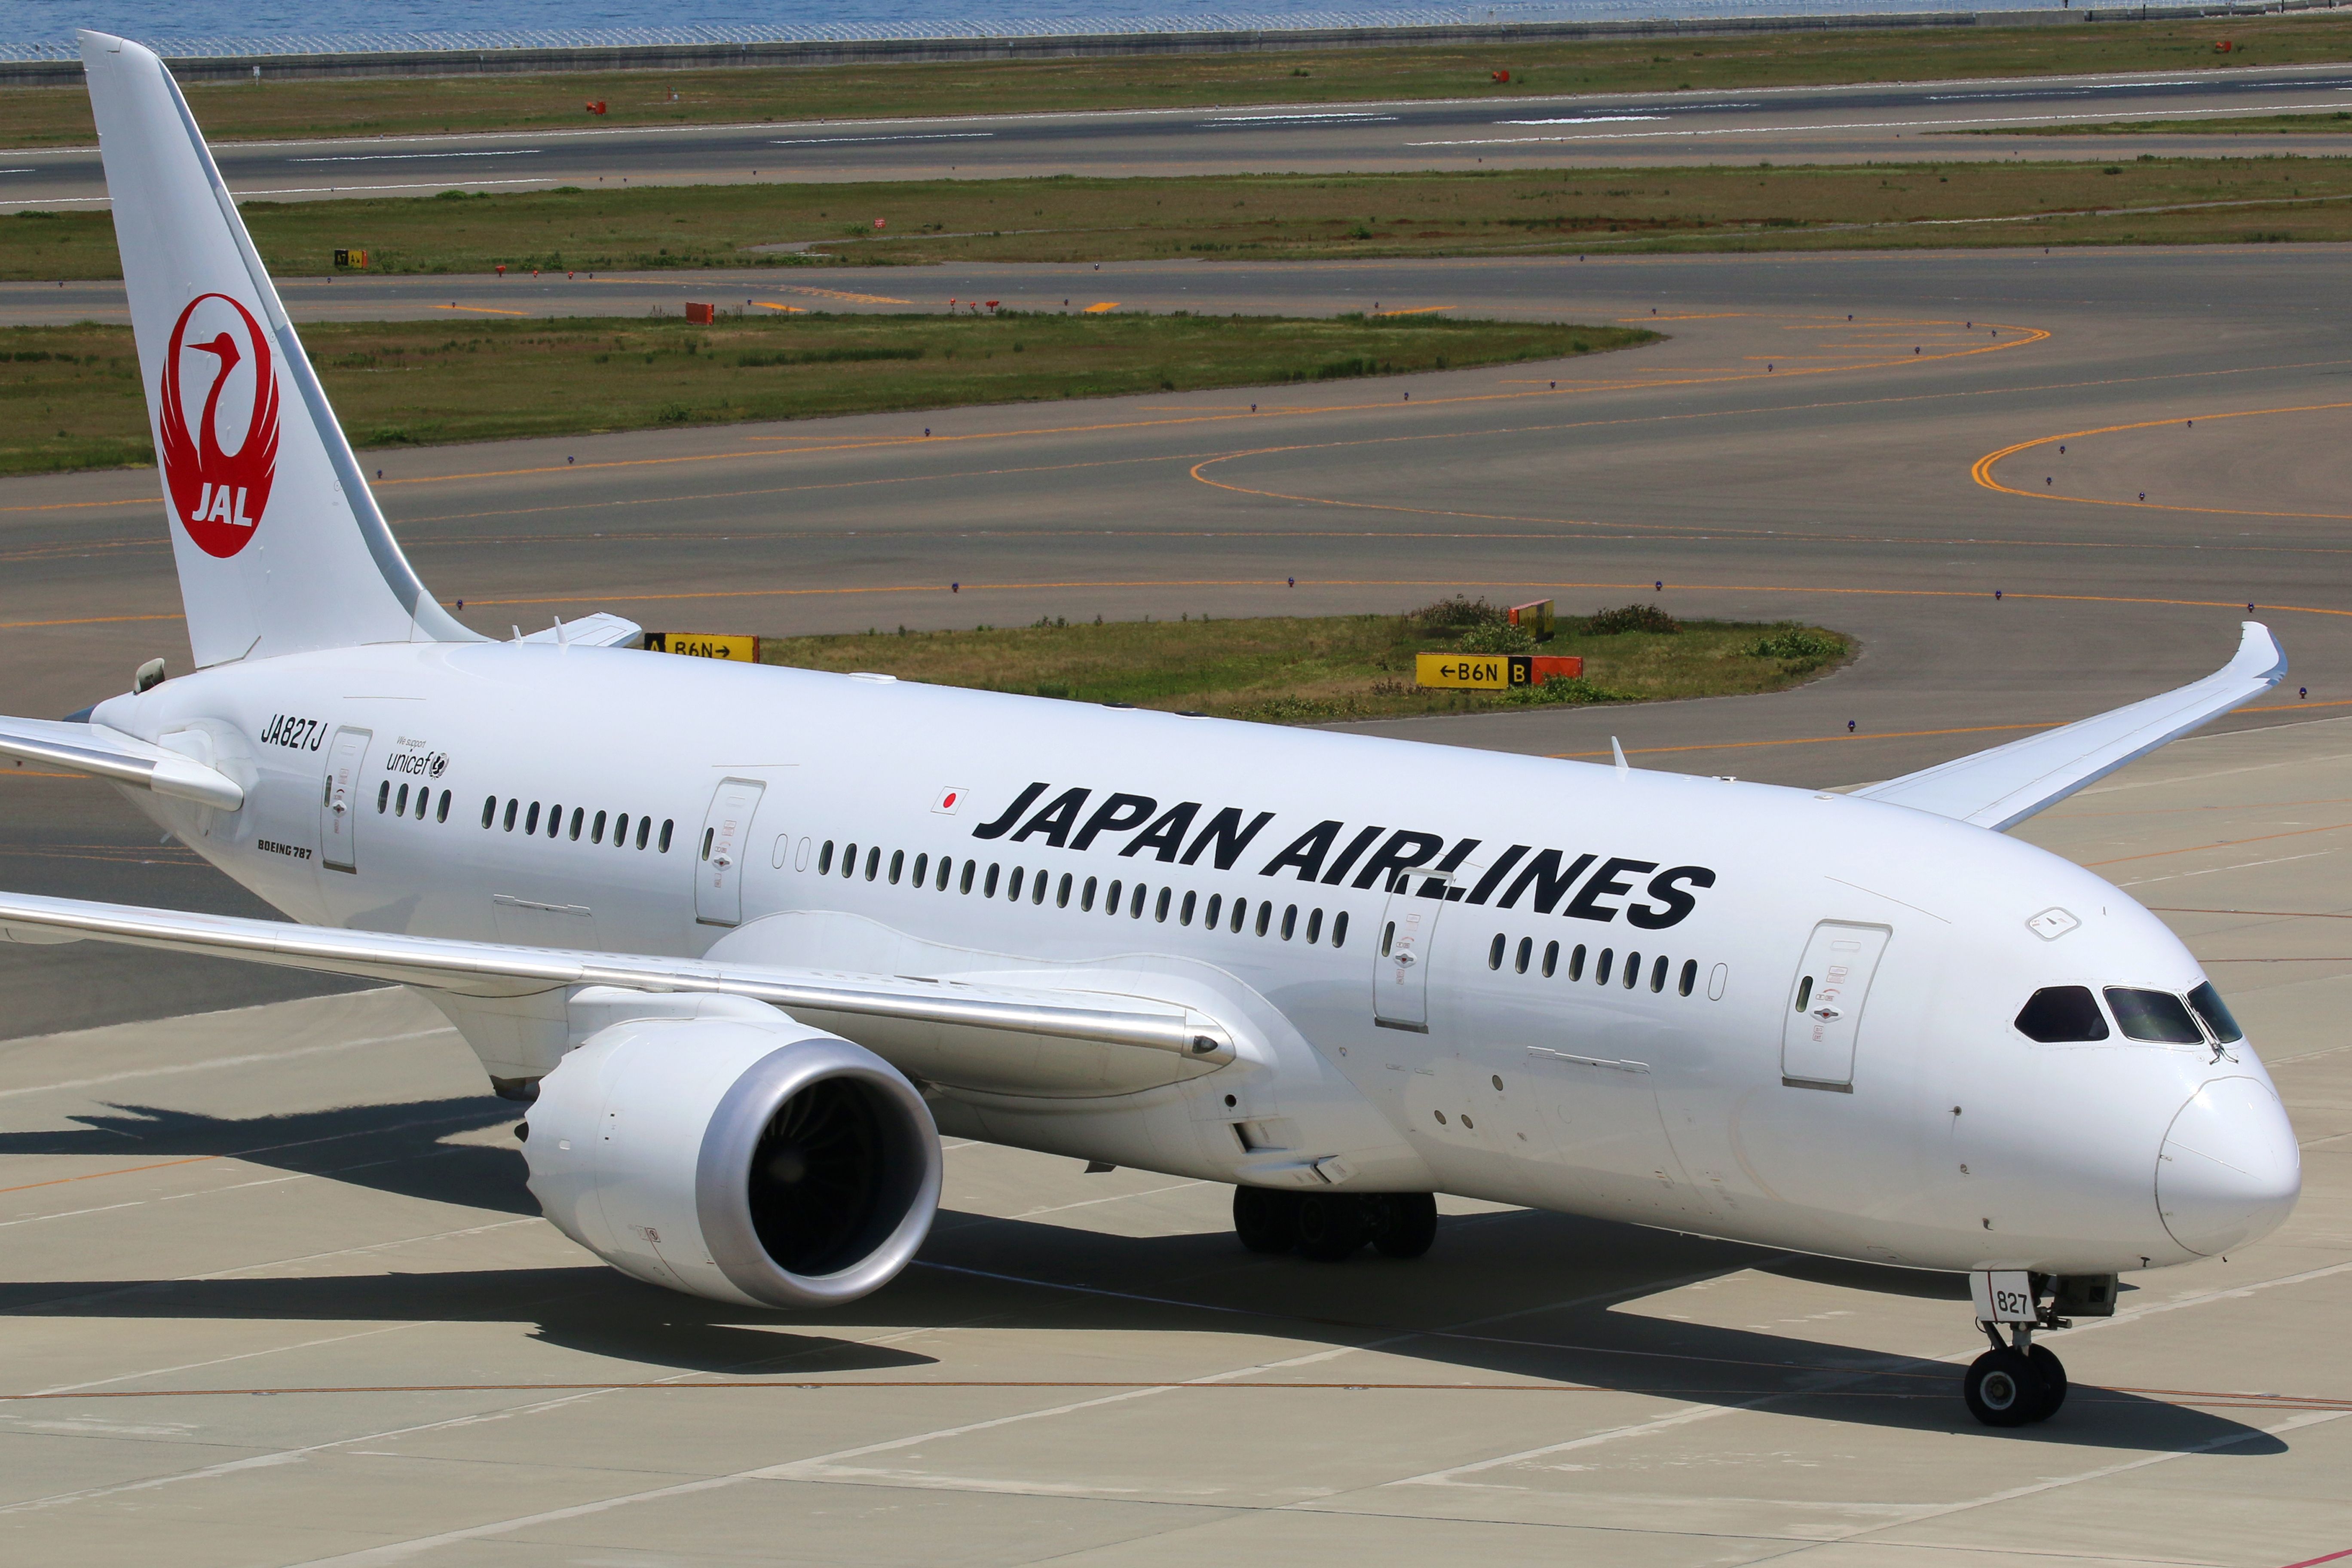 Japan Airlines Boeing 787 taxiing